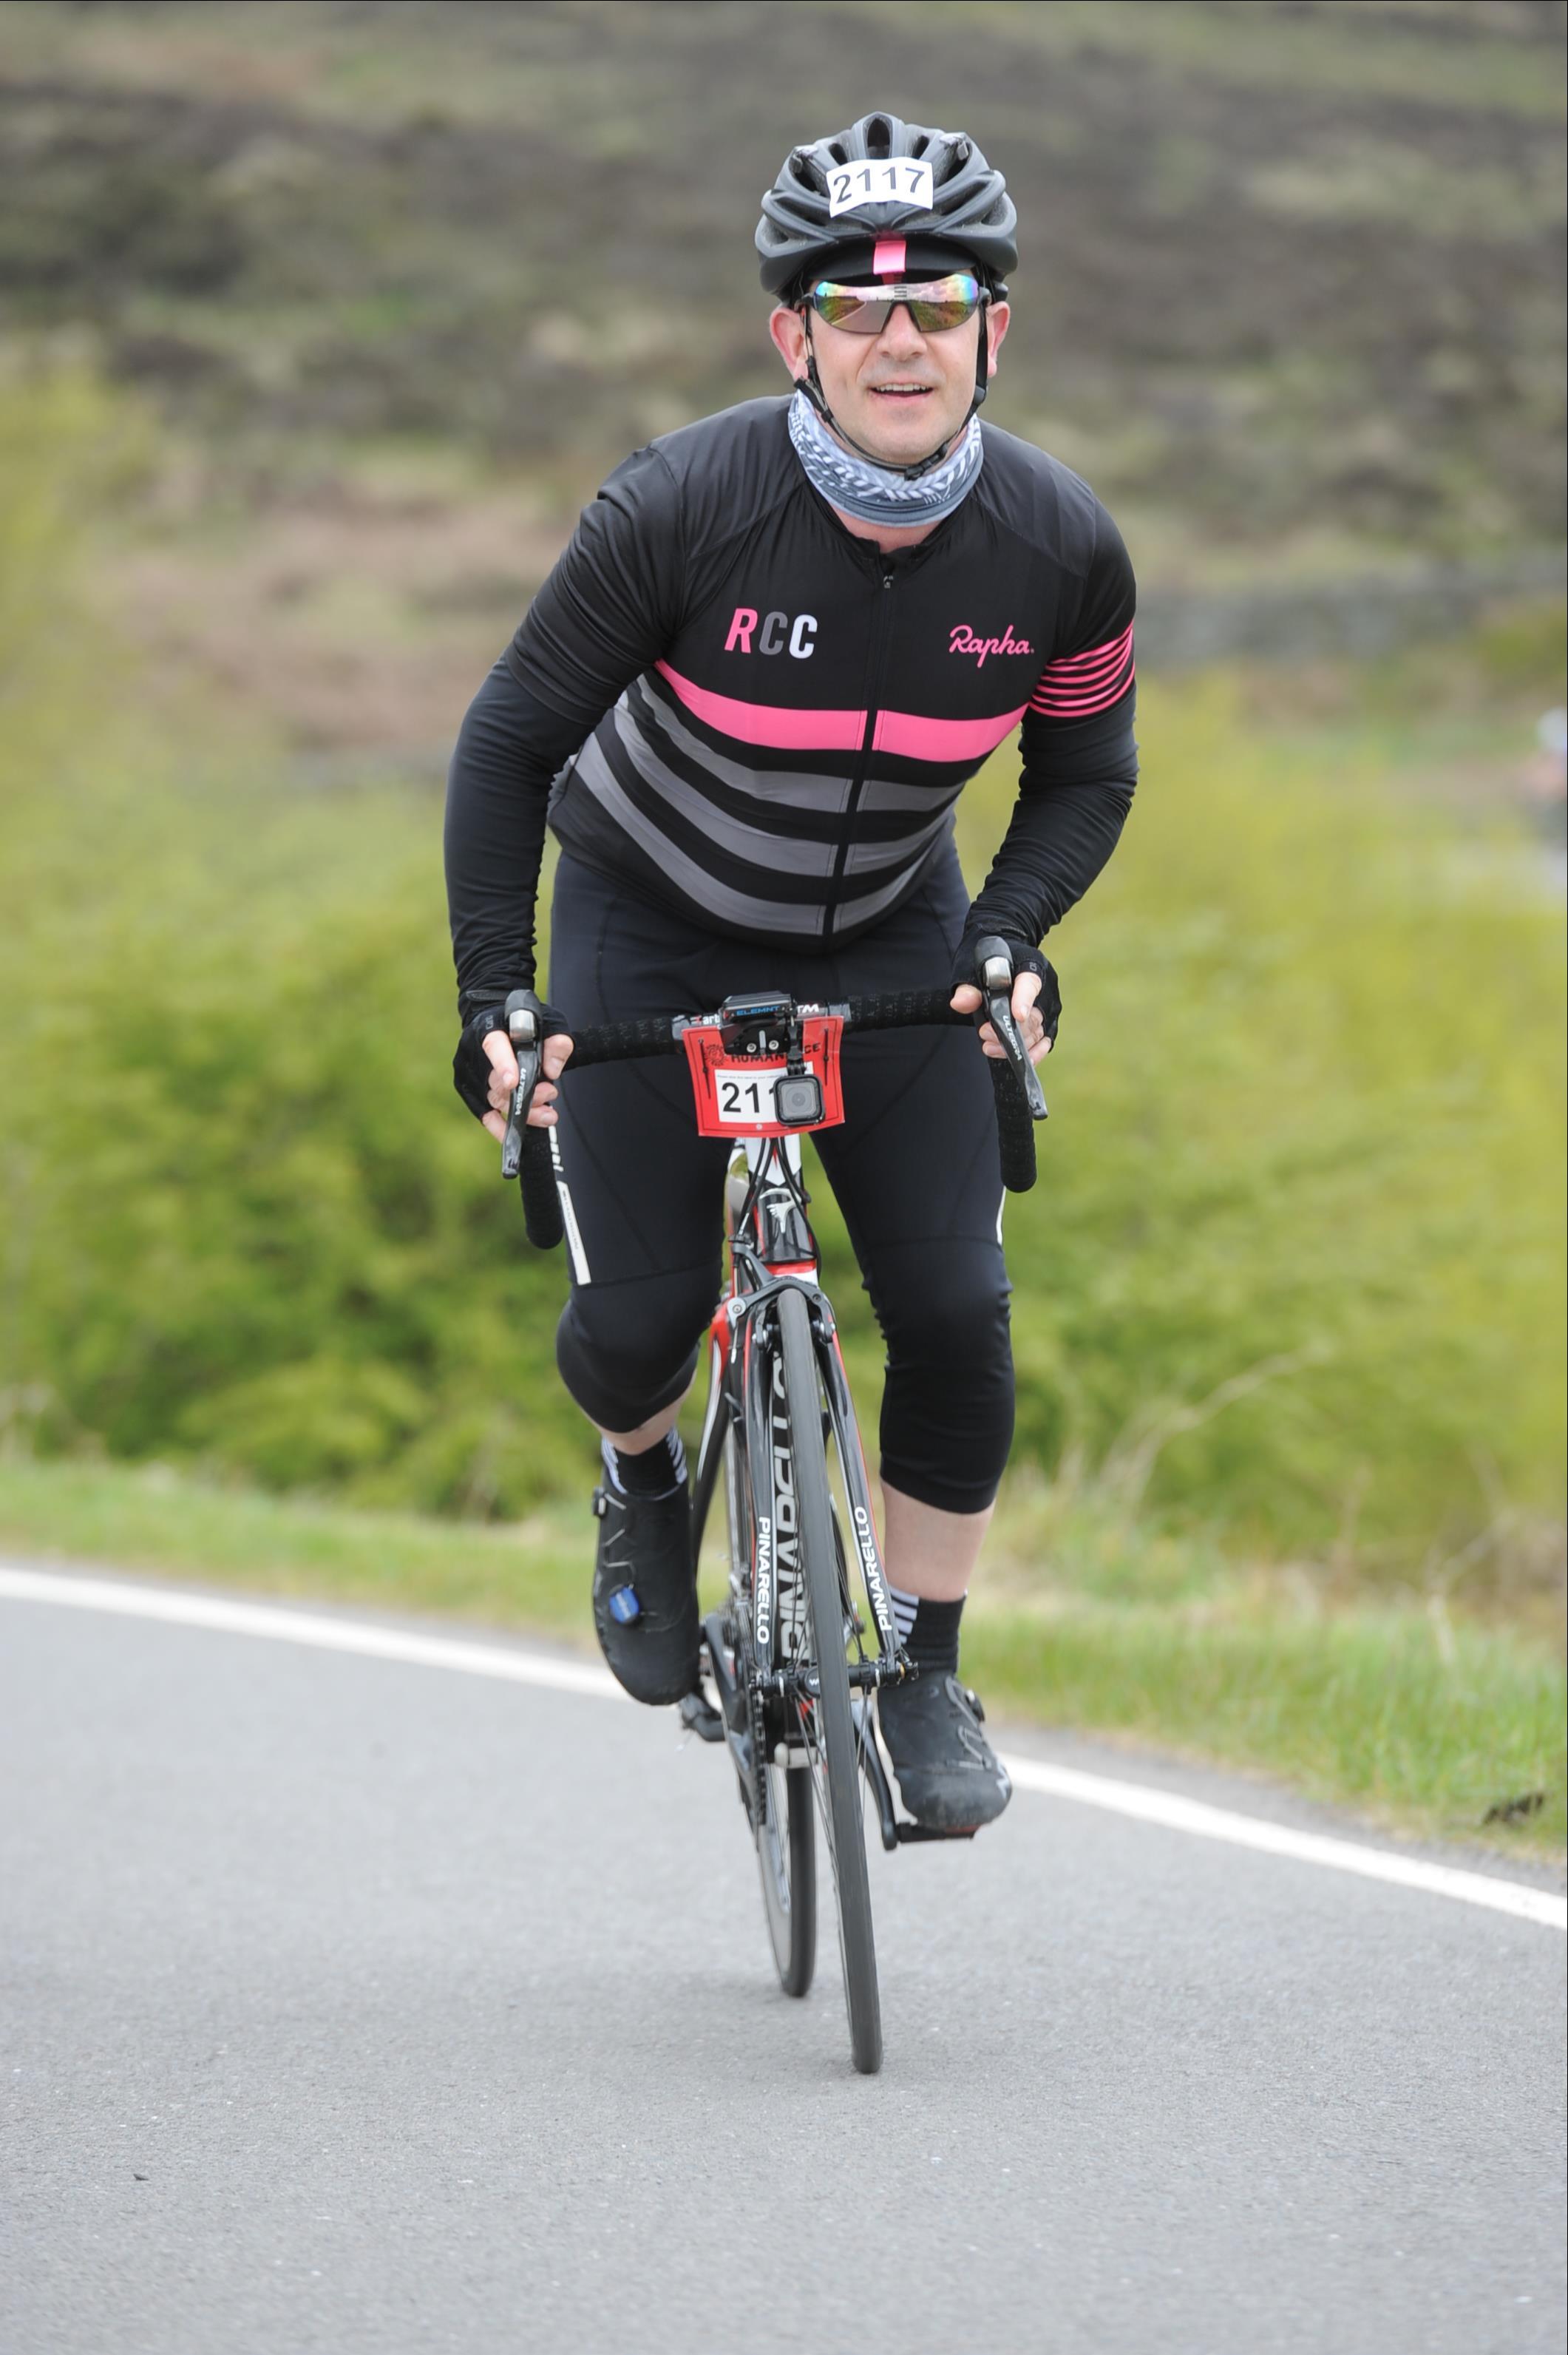 Simon riding the 100km Tour de Yorkshire 2017